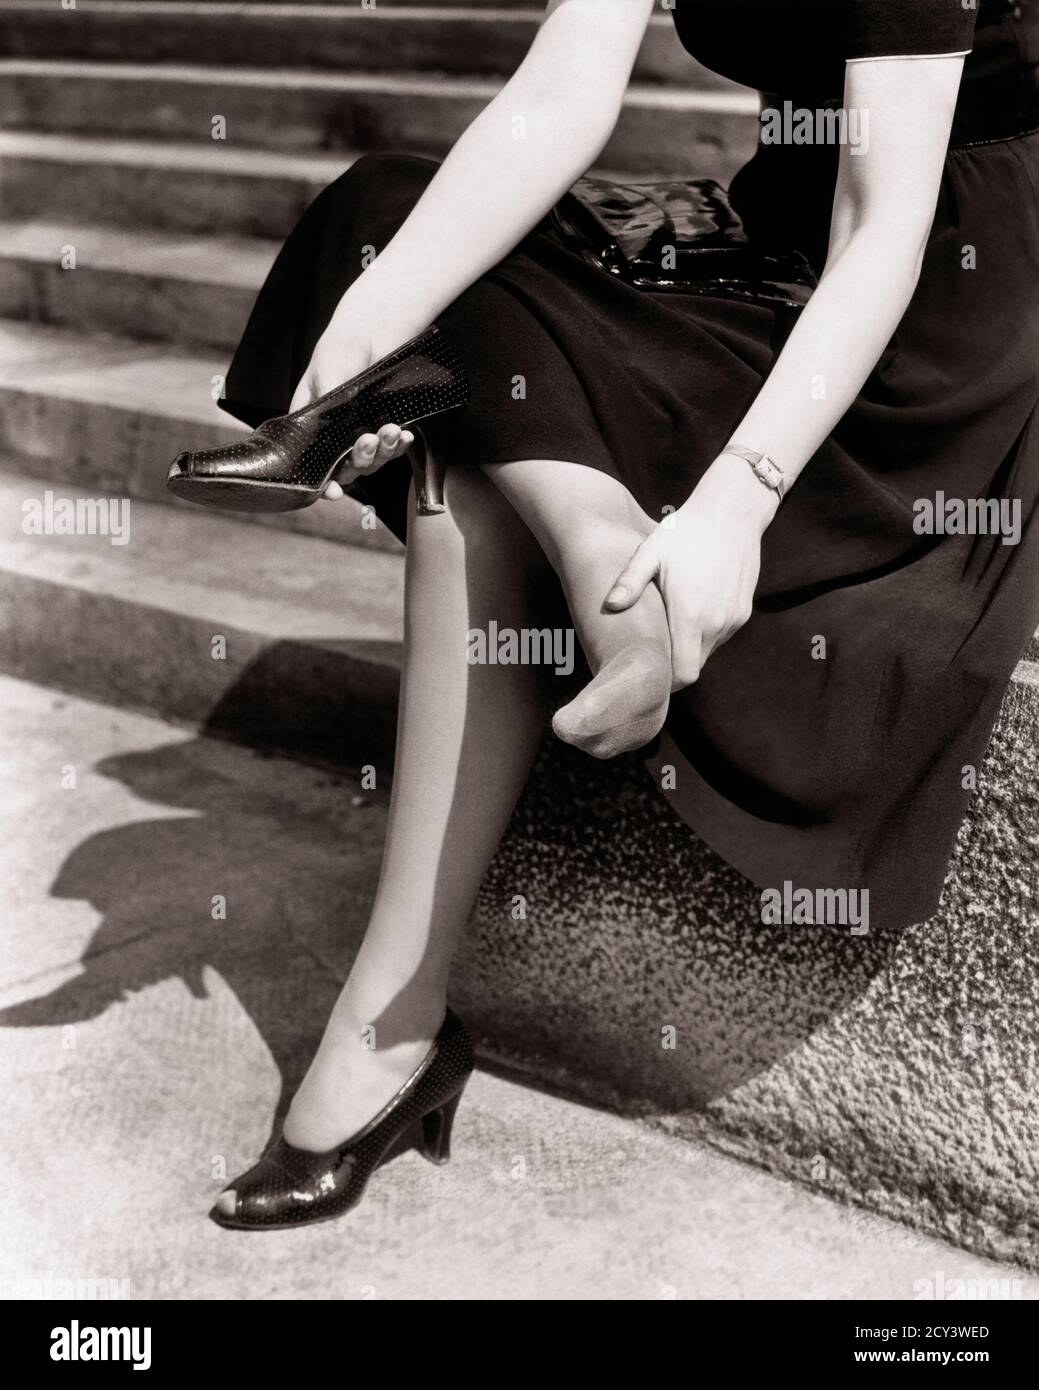 Ladies shoes 1940s -Fotos und -Bildmaterial in hoher Auflösung – Alamy